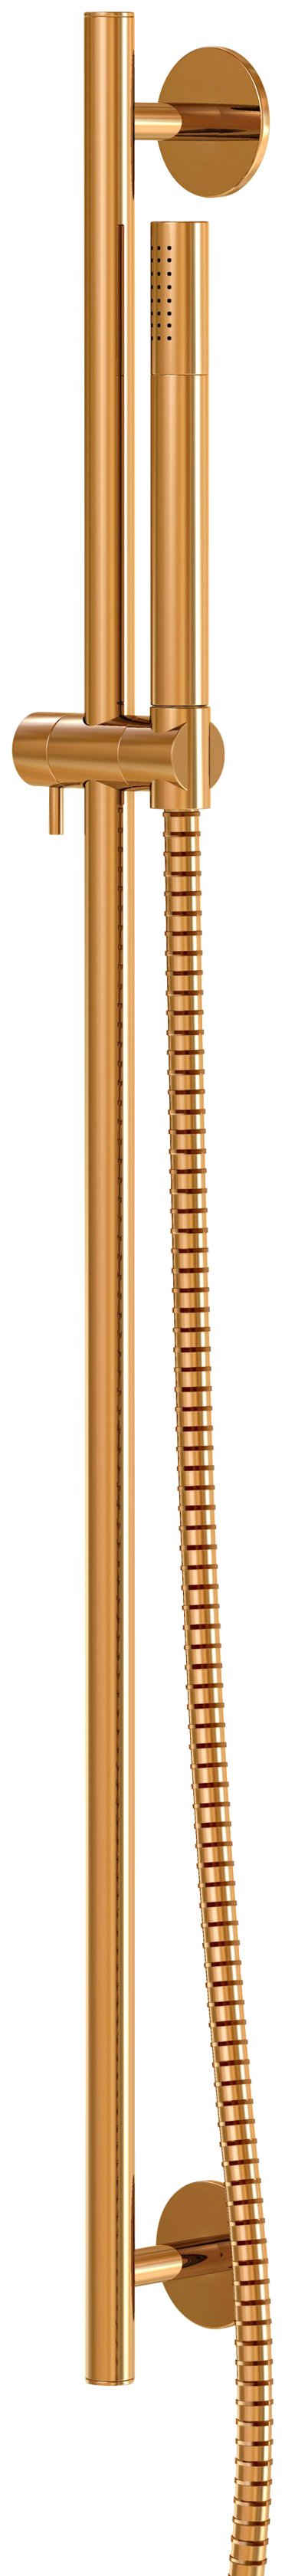 Steinberg Brausegarnitur »100«, Höhe 90 cm, 1 Strahlart(en), rosé gold